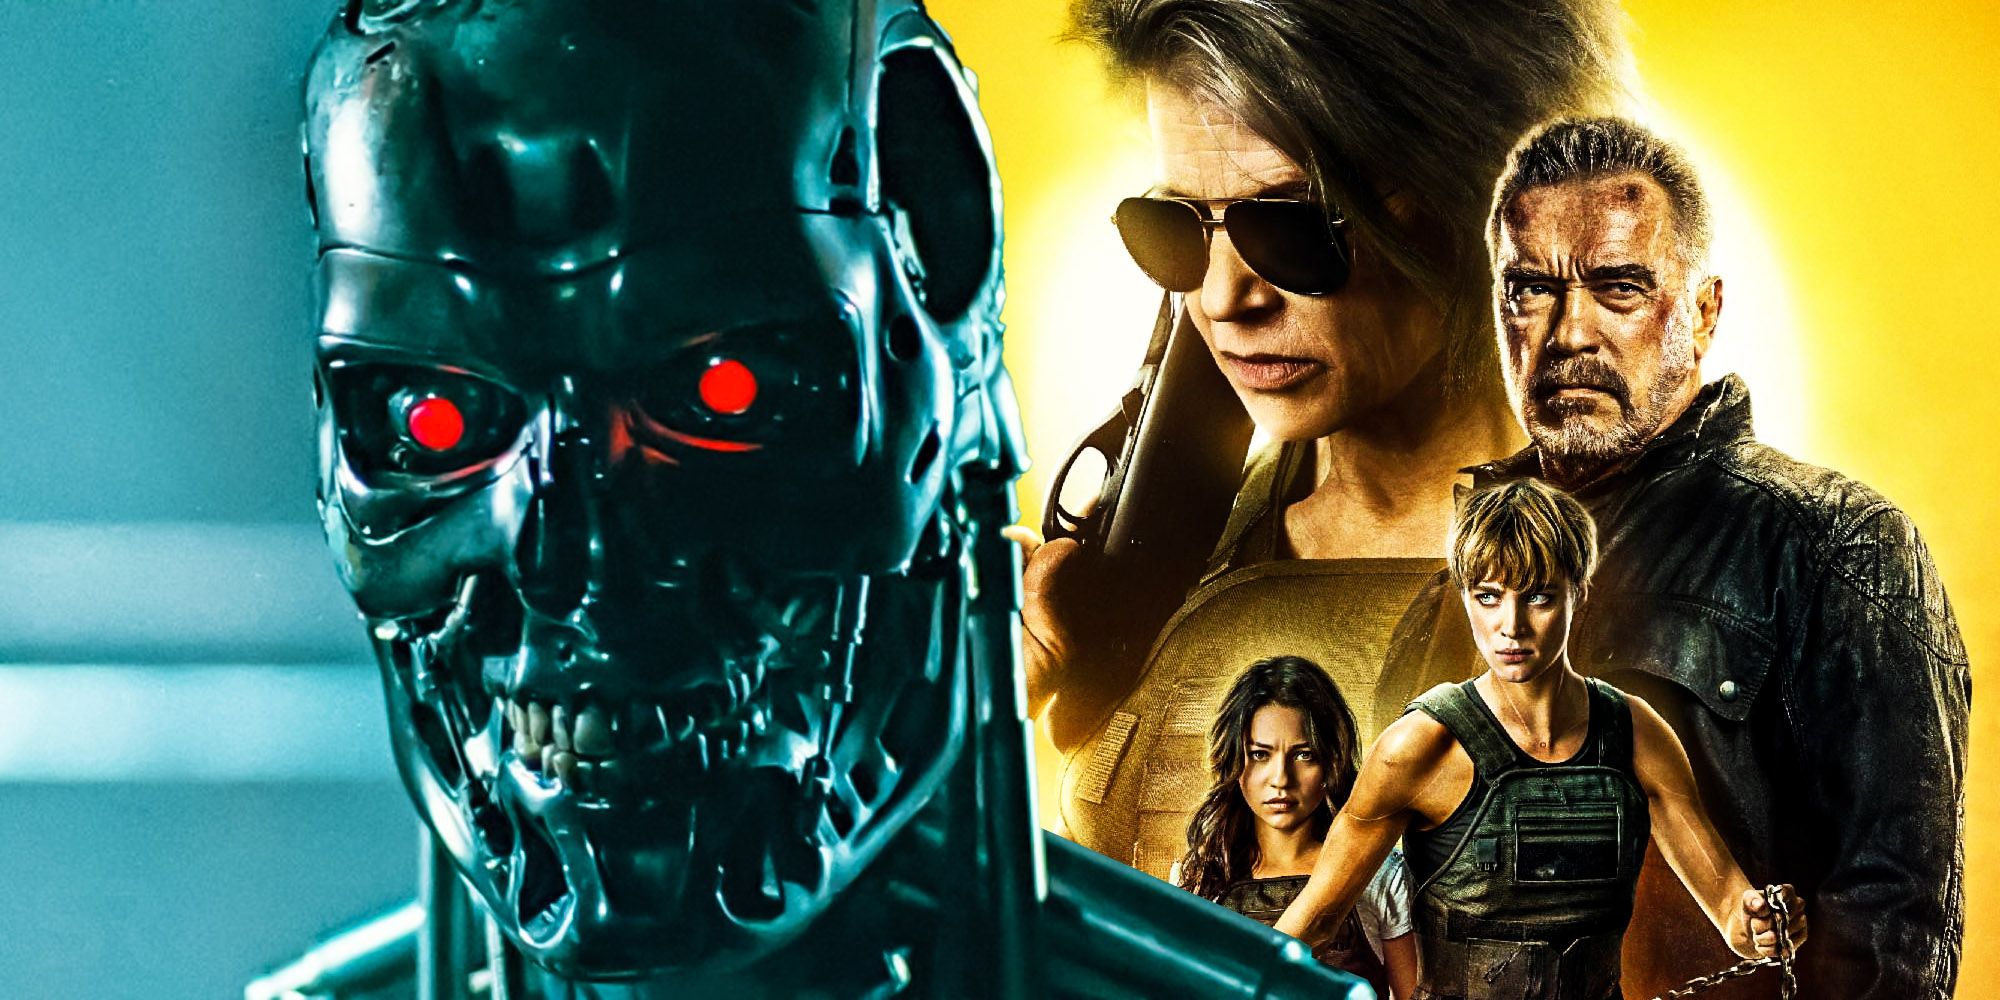 Terminator dark fate undermined entire franchise